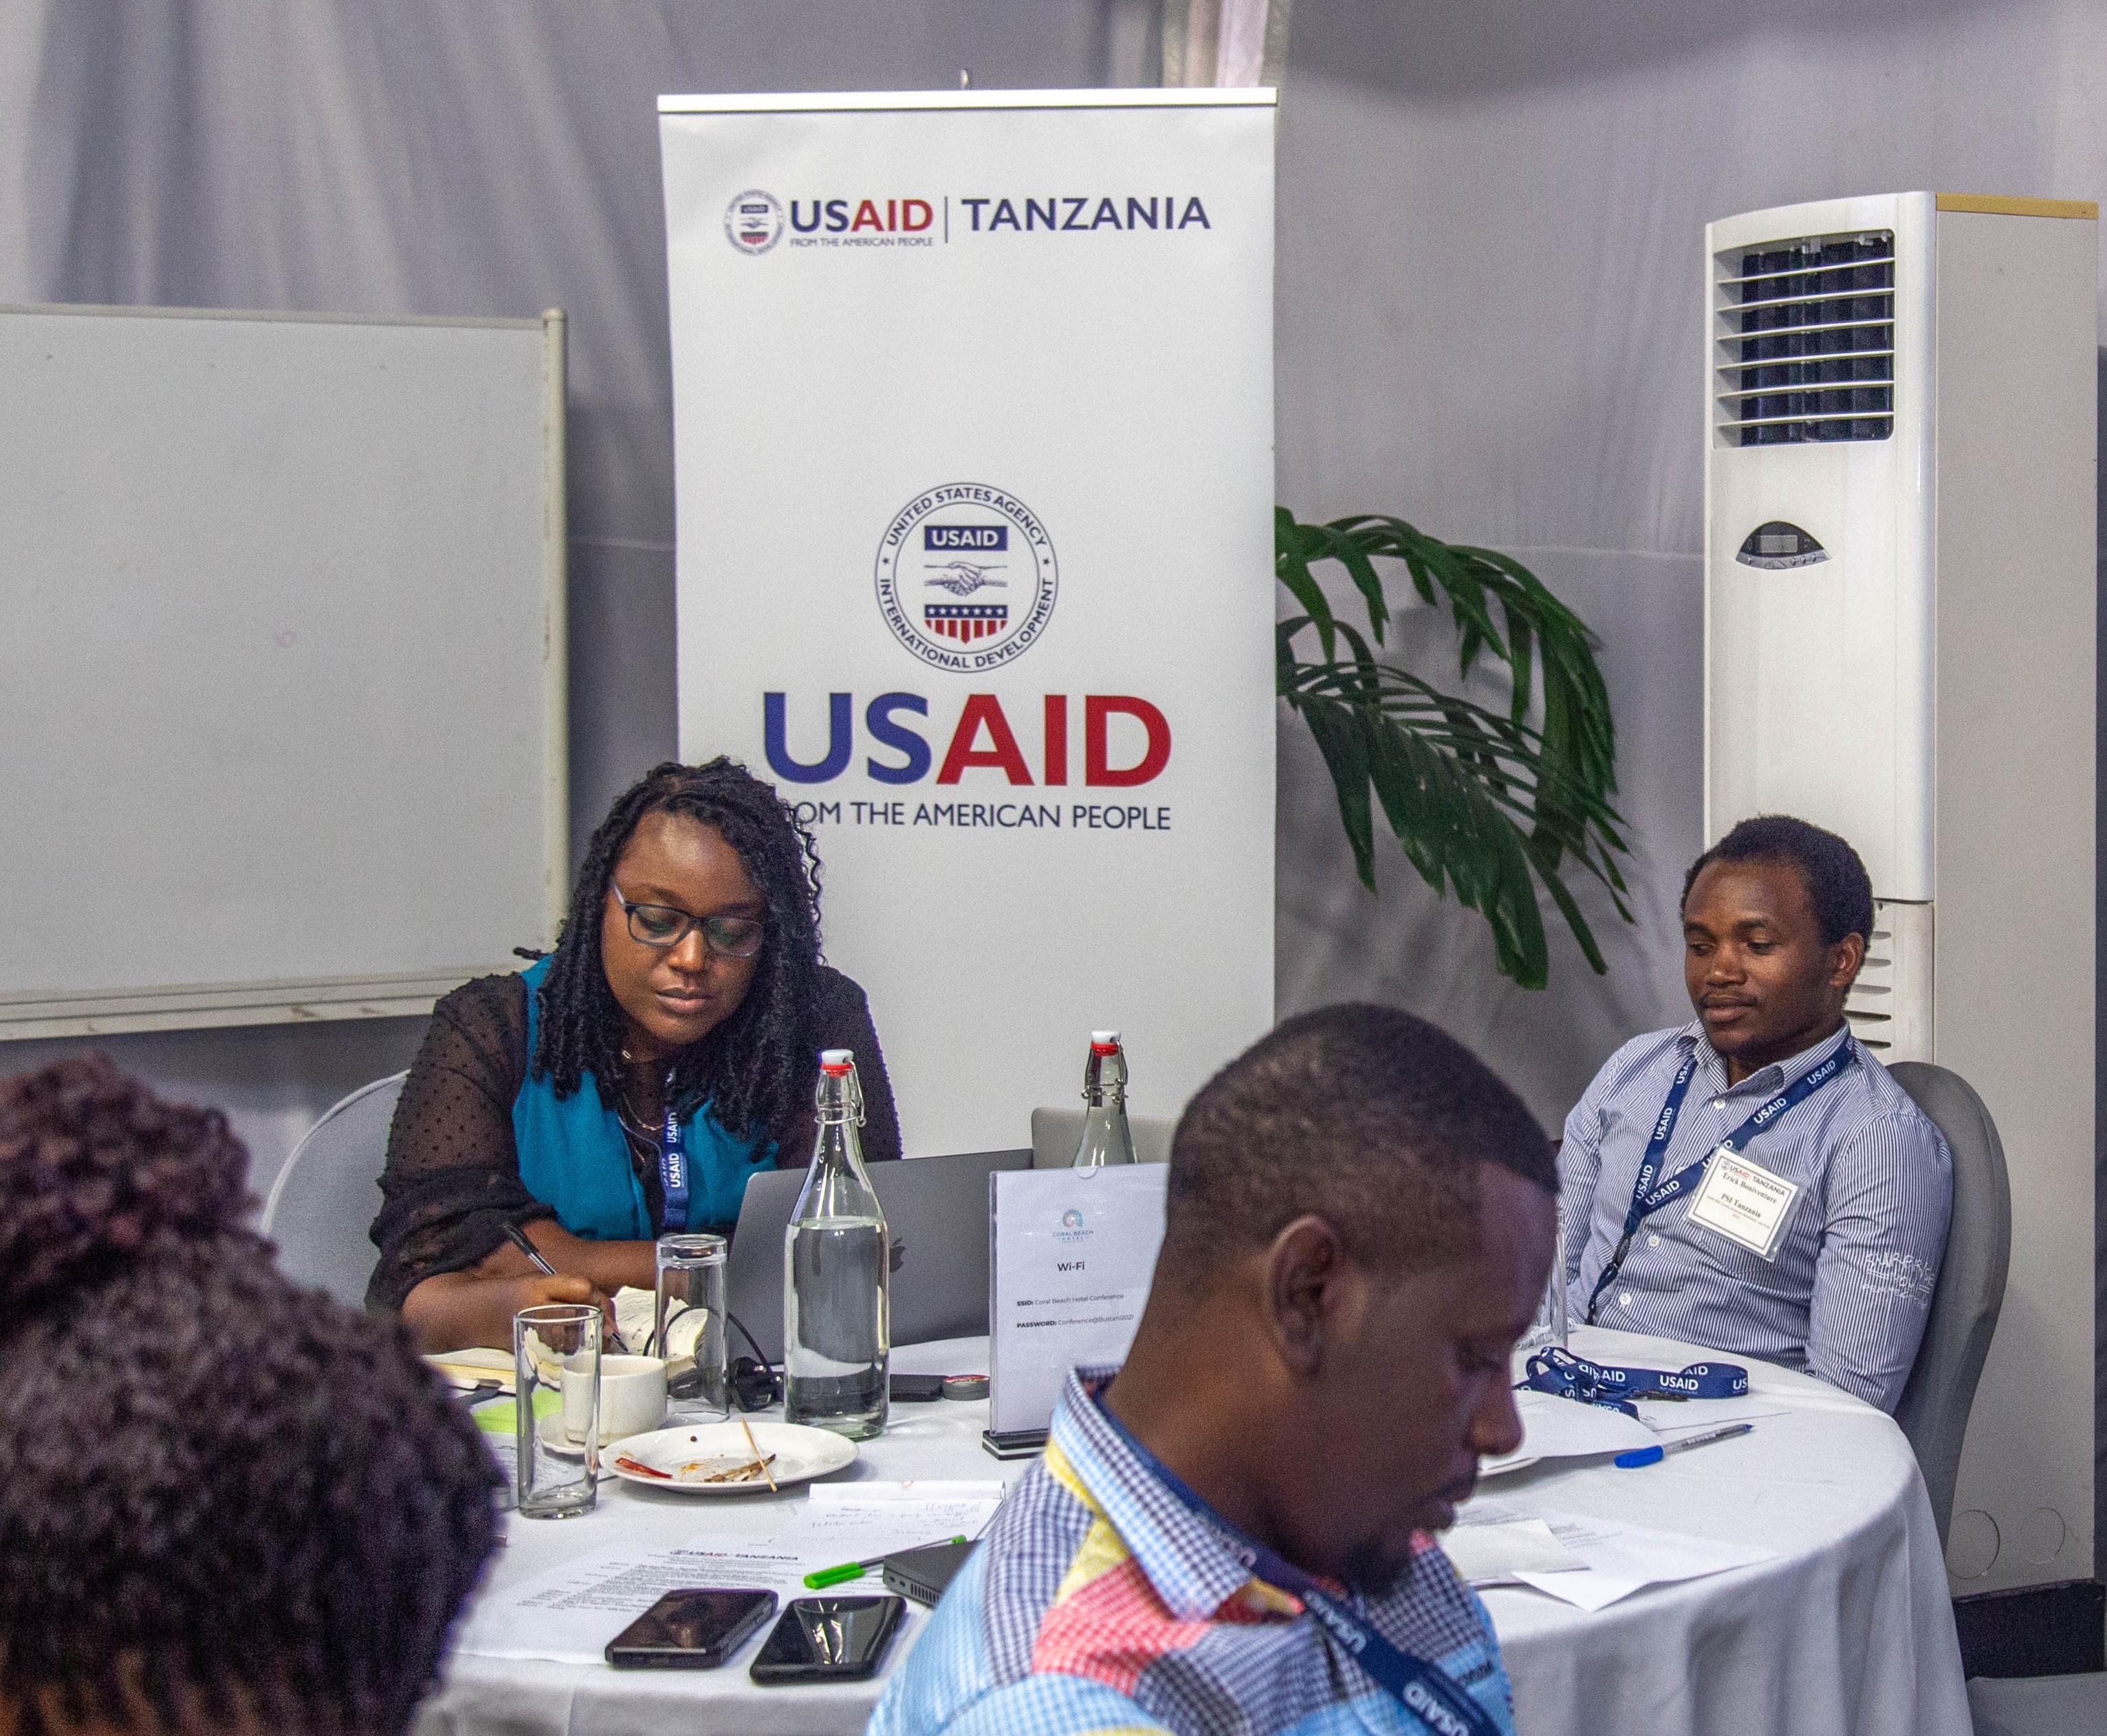 TRAINING: Ifakara sharpens communication skills at USAID Workshop